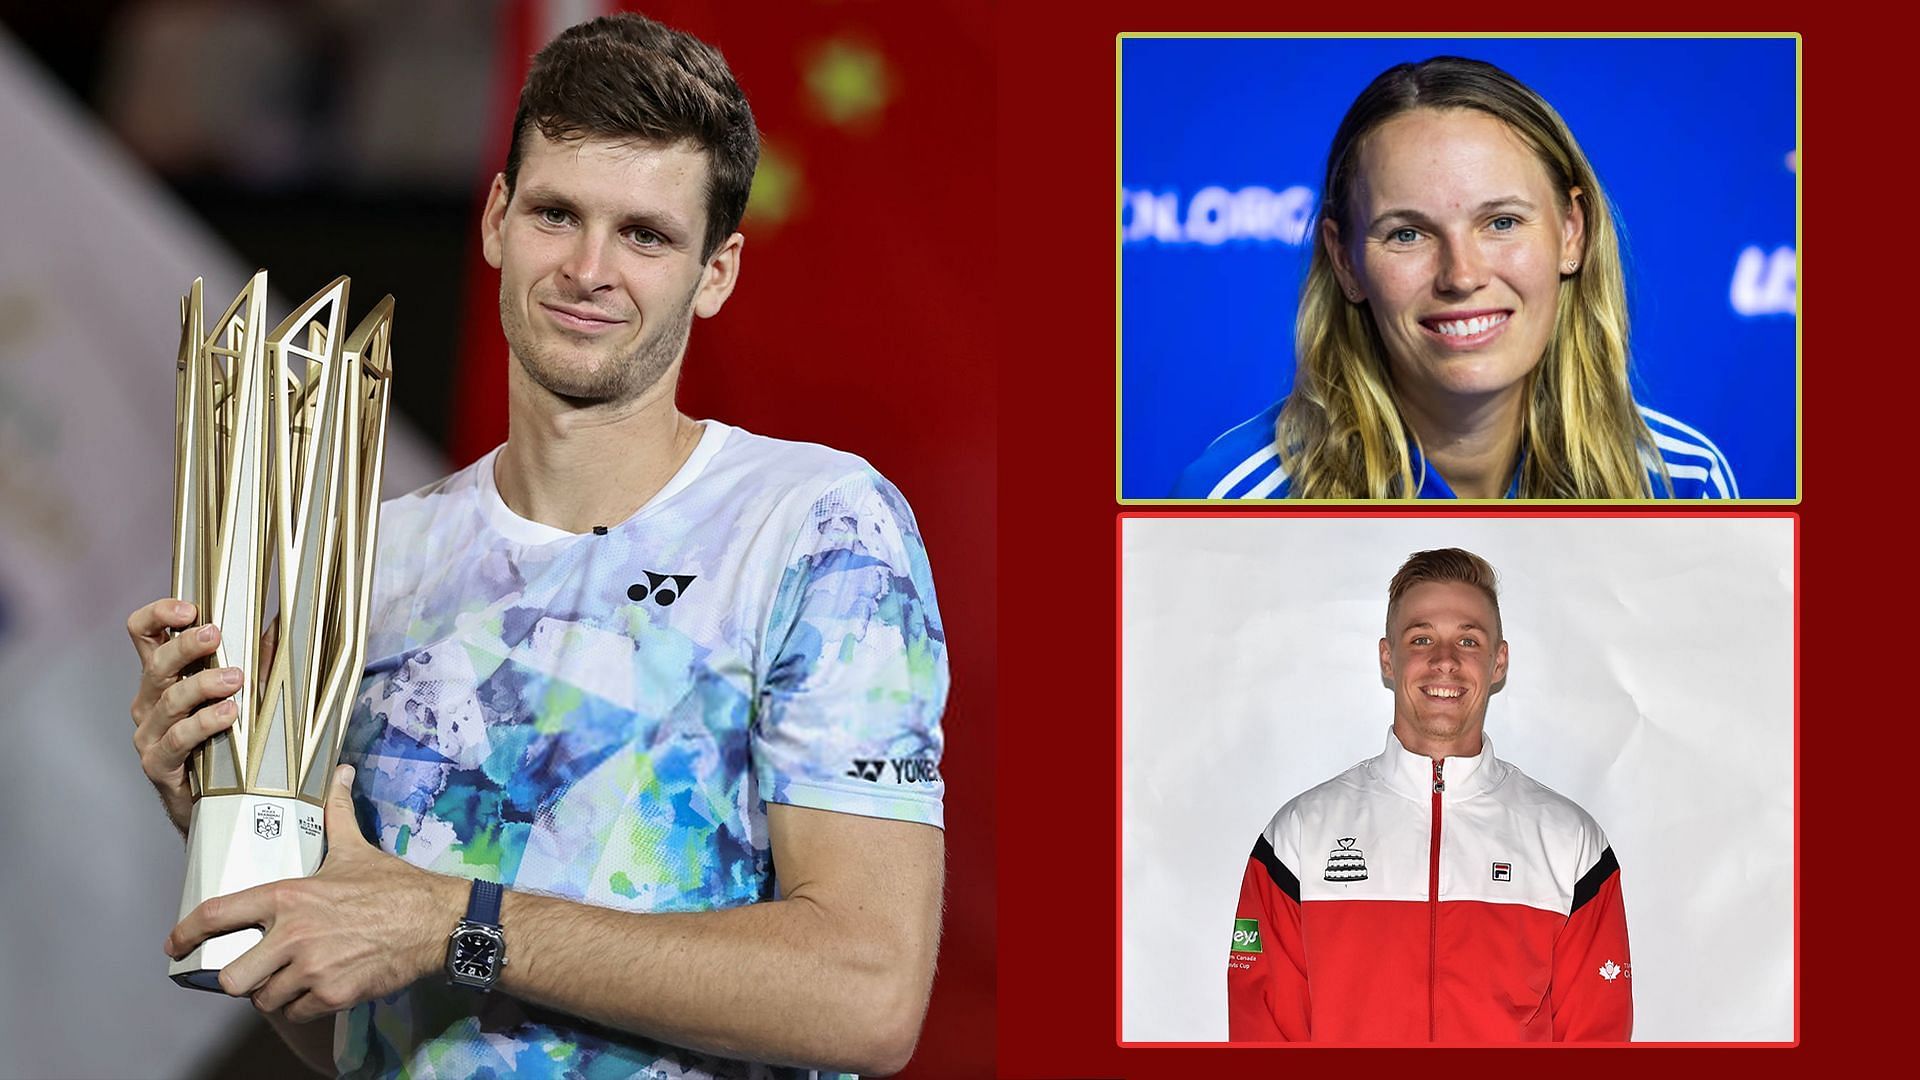 Caroline Wozniacki, Denis Shapovalov and other players congratulate Hubert Hurkacz